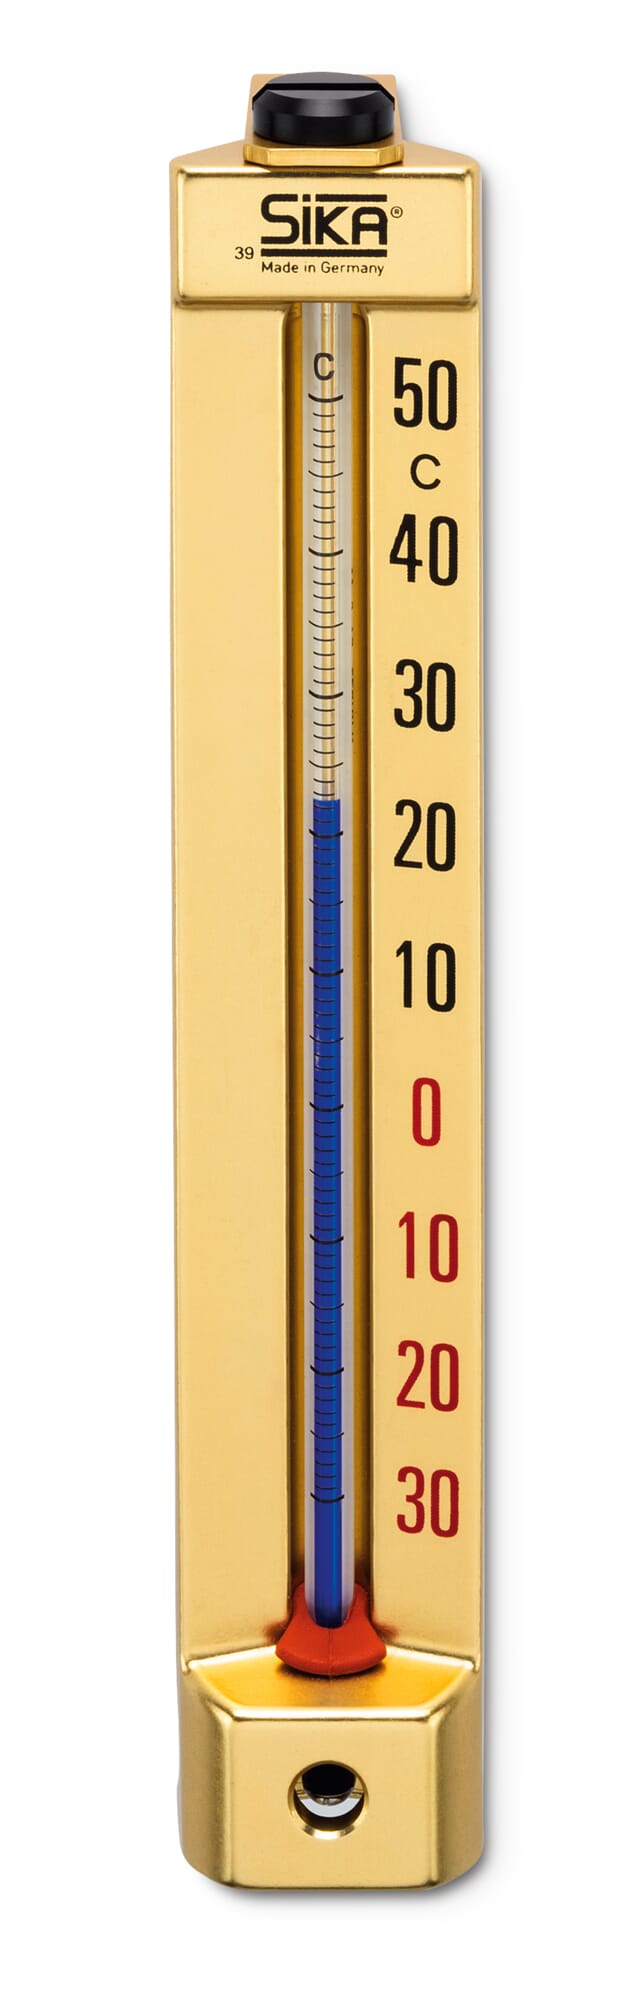 https://assets.manufactum.de/p/089/089918/89918_01.jpg/sika-outdoor-thermometer.jpg